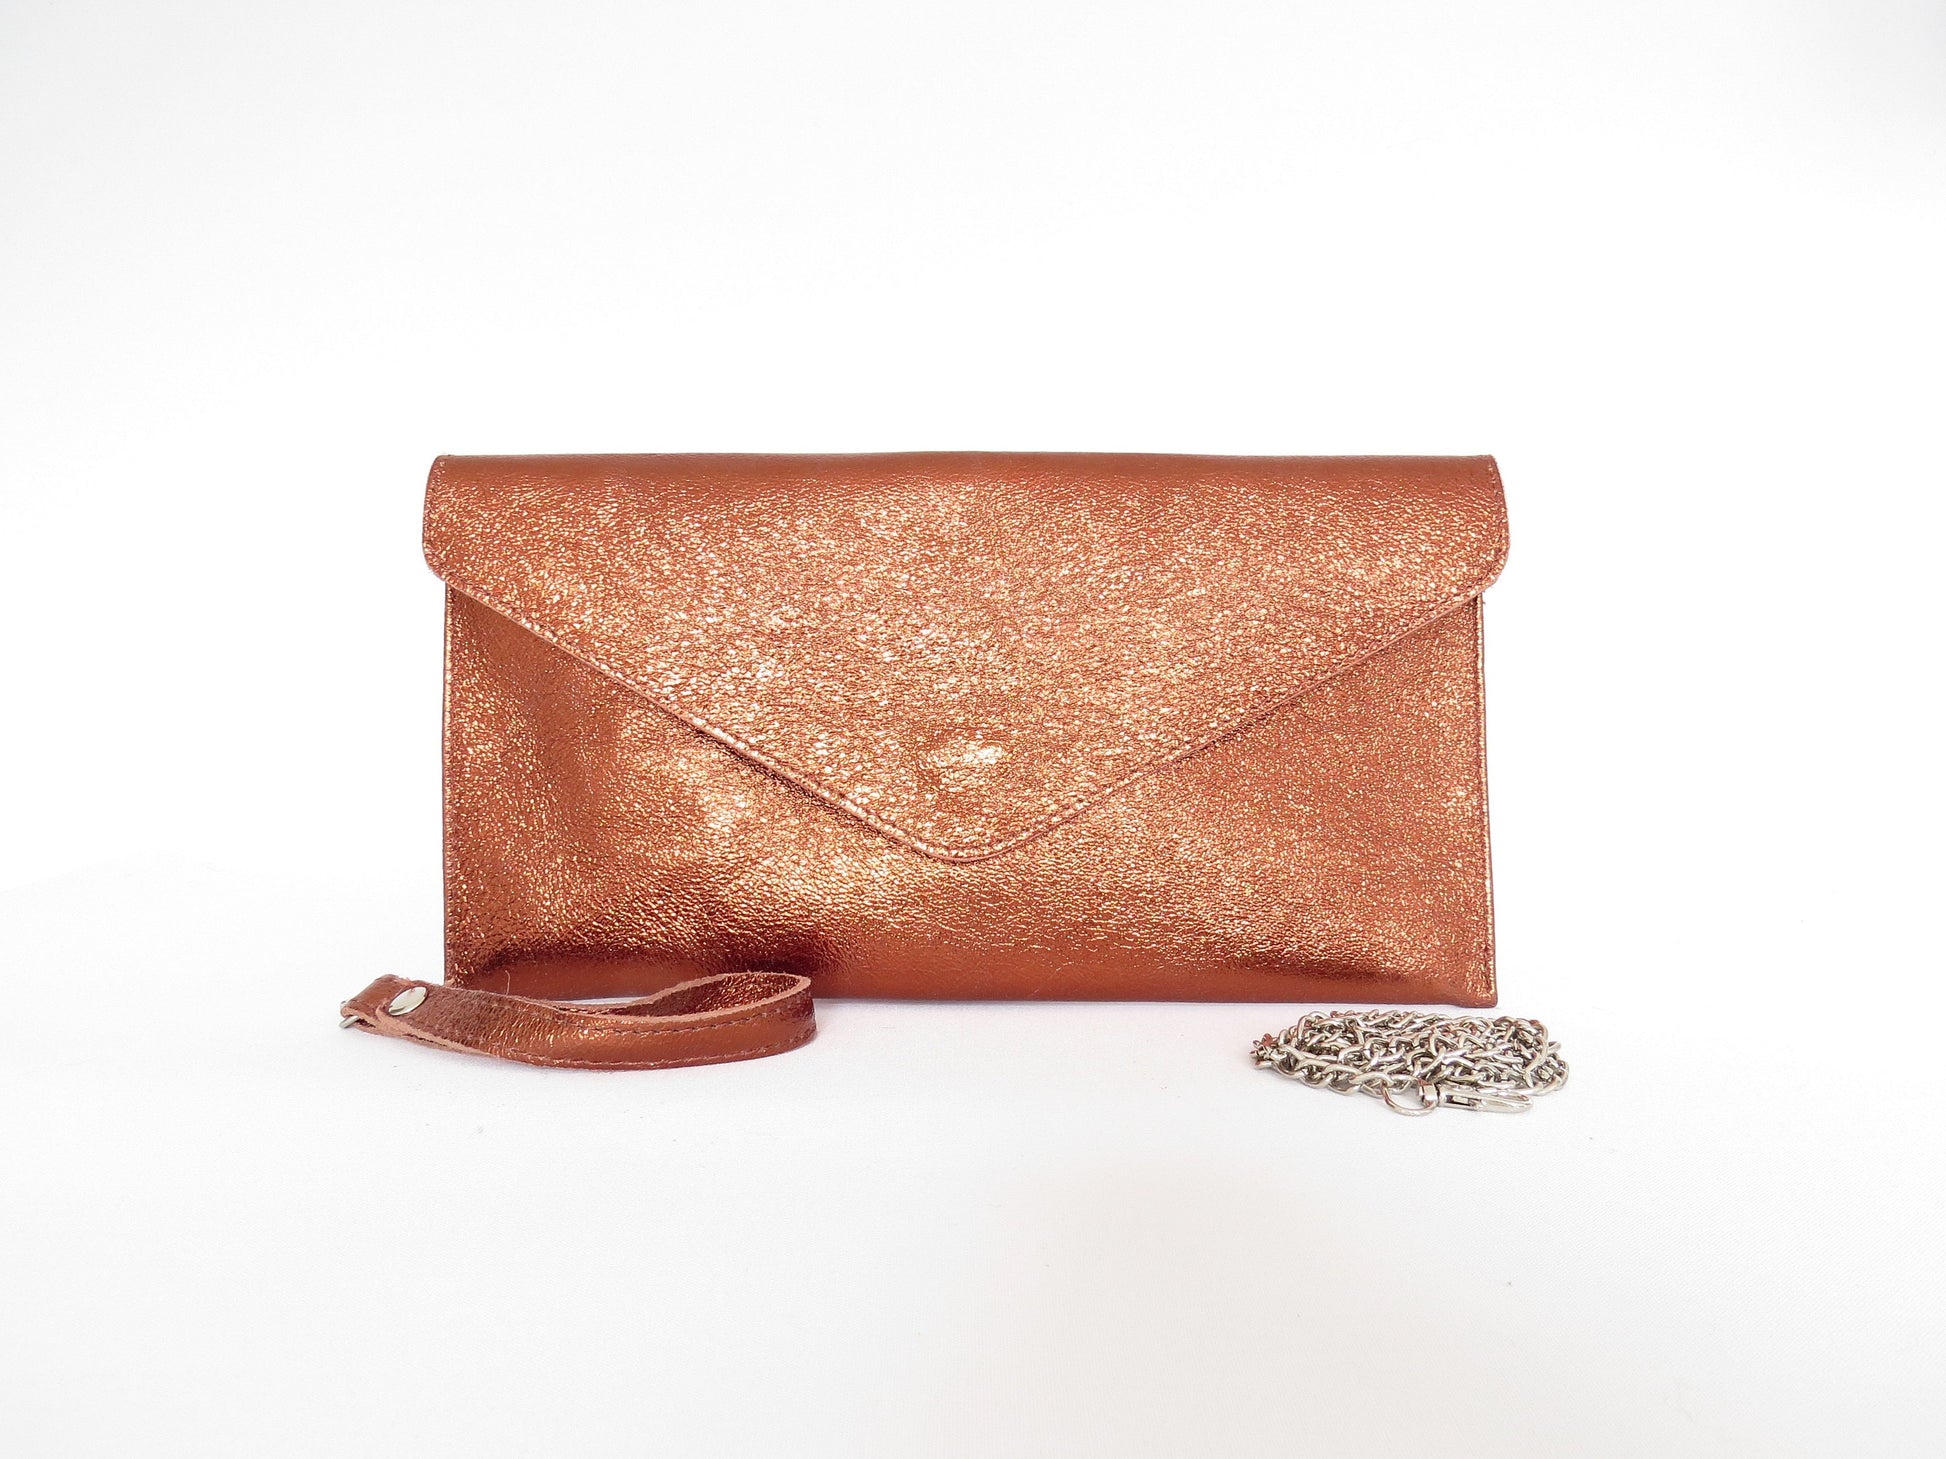 Metallic Bronze envelope clutch bag with chain strap